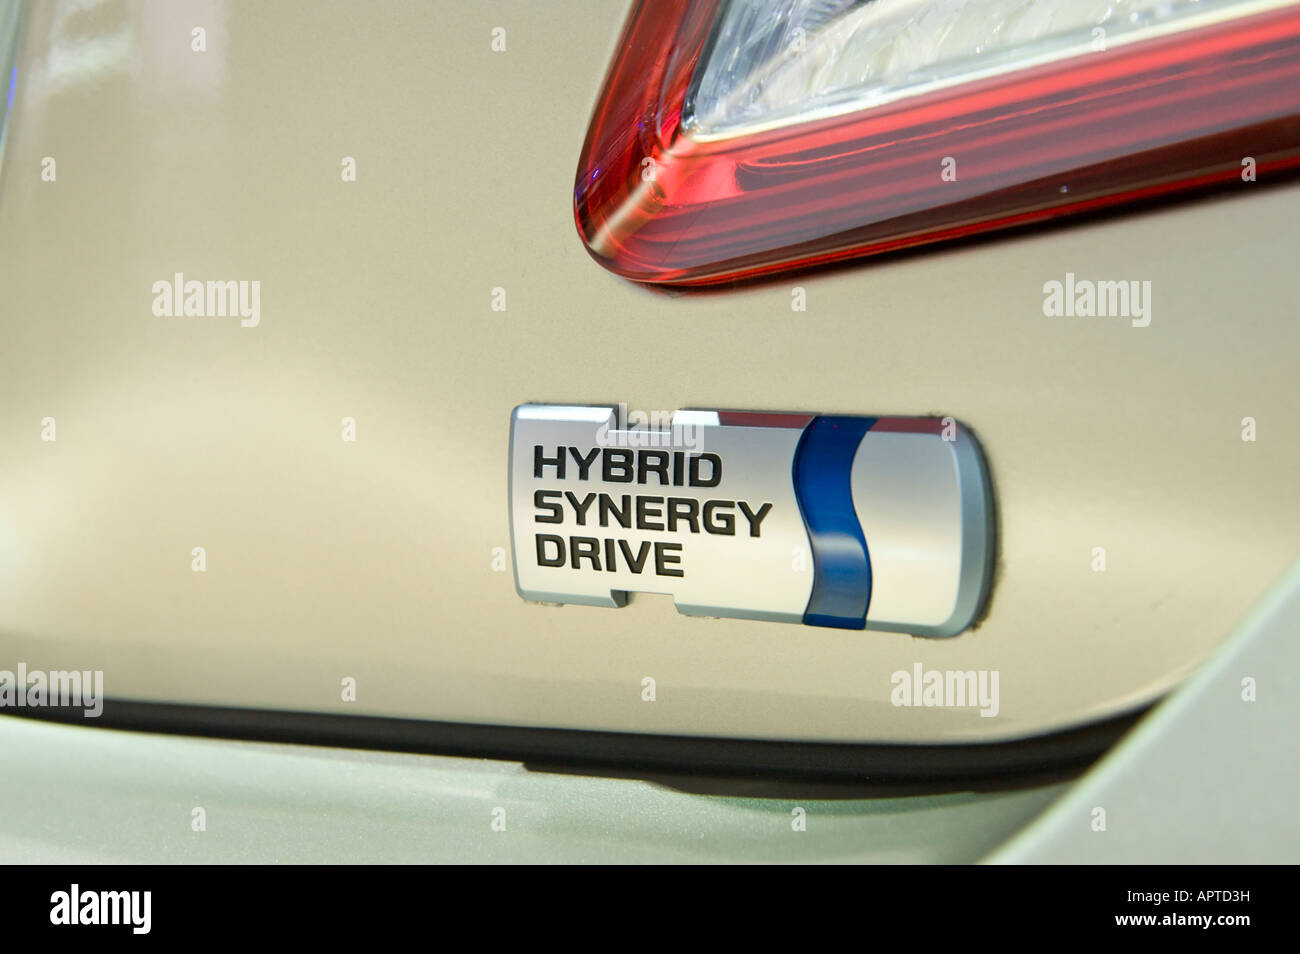 Hybrid Synergy Drive emblem on the back of a 2009 Toyota Camry Hybrid Stock Photo